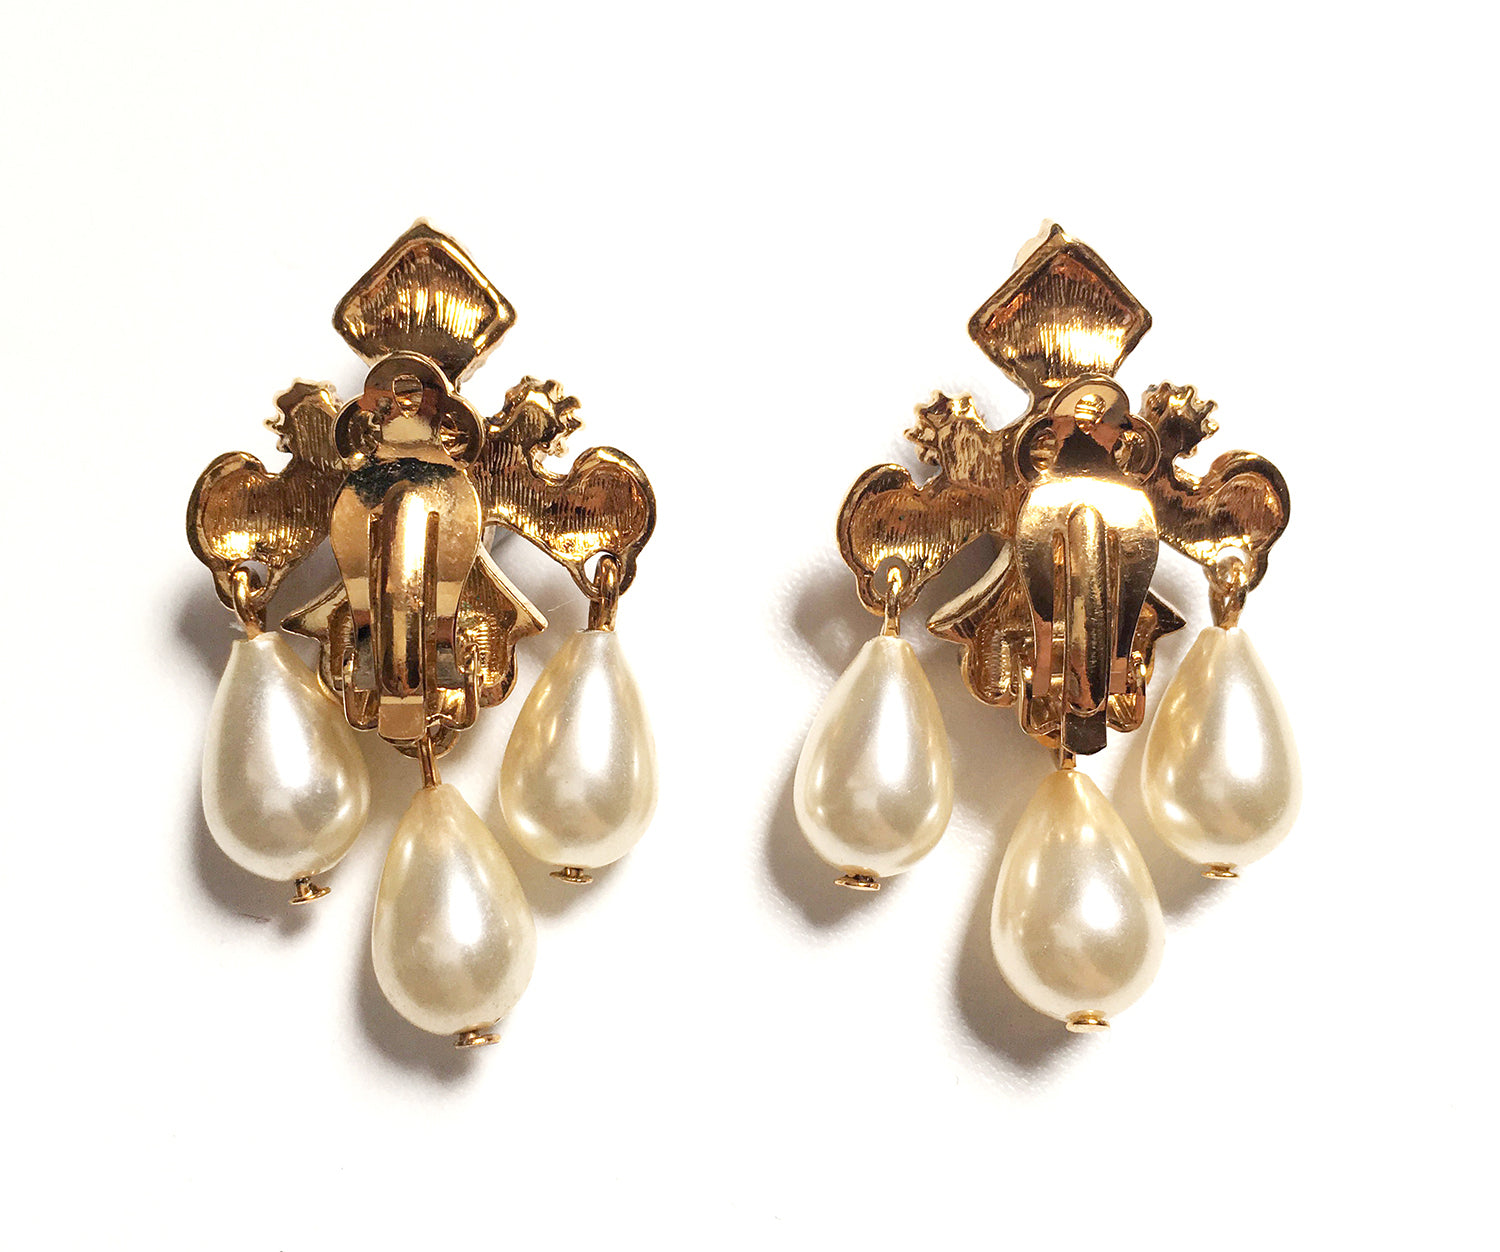 Vintage Swarovski Component Crystal Faux Pearl Chandelier Dangling Clip Earrings 施華洛世奇元素水滴型水晶仿珍珠吊燈耳夾耳環